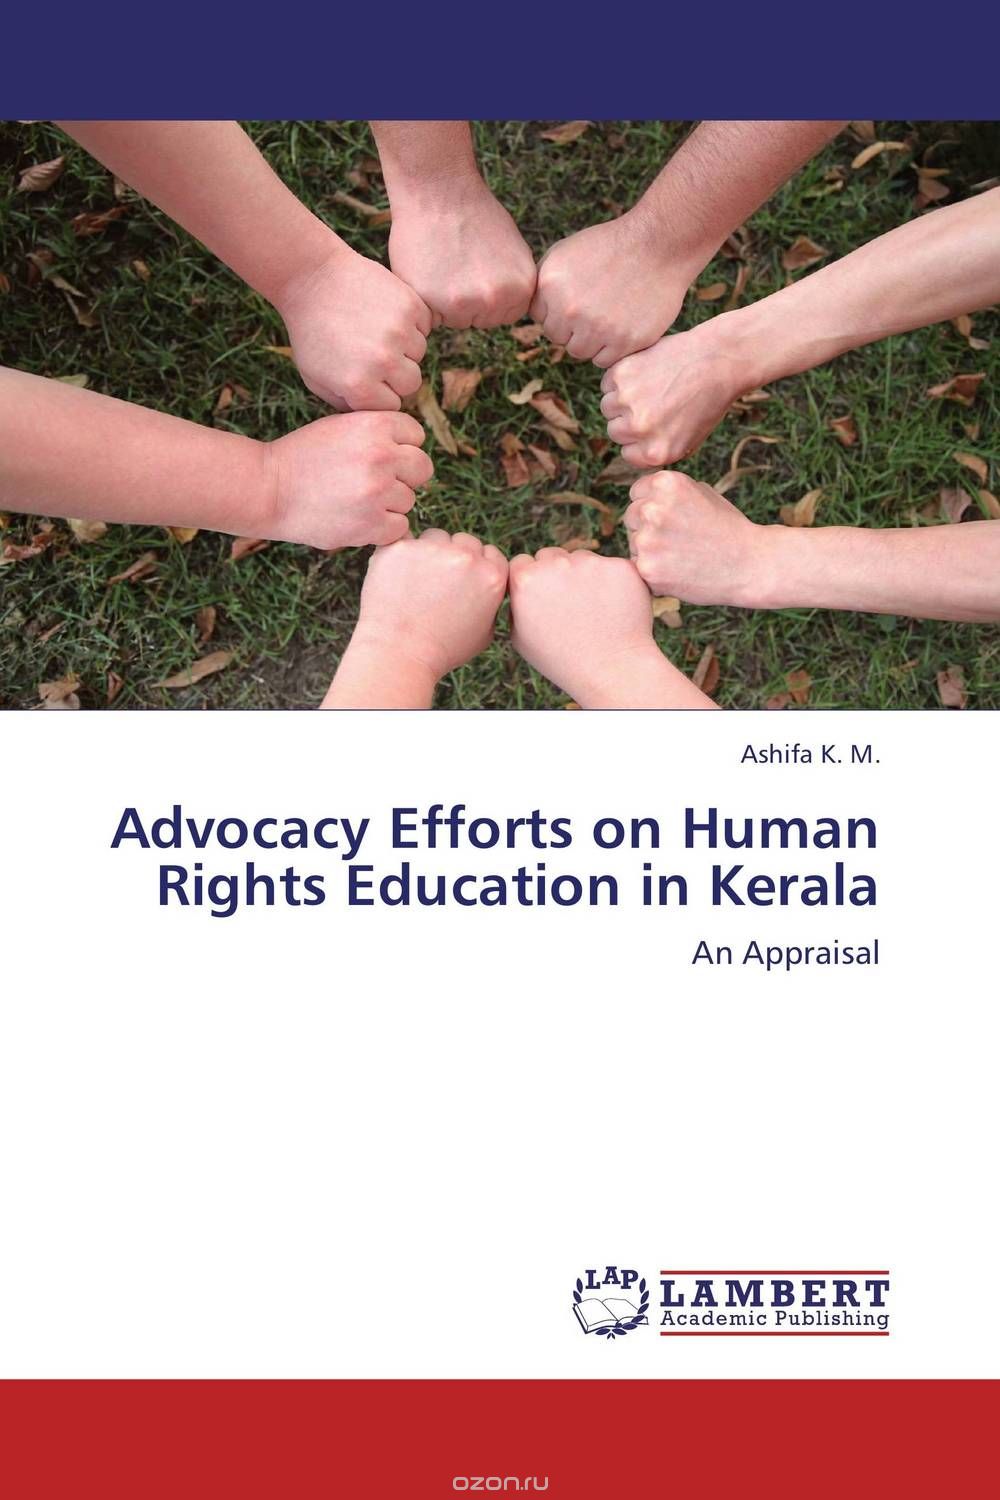 Скачать книгу "Advocacy Efforts on Human Rights Education in Kerala"